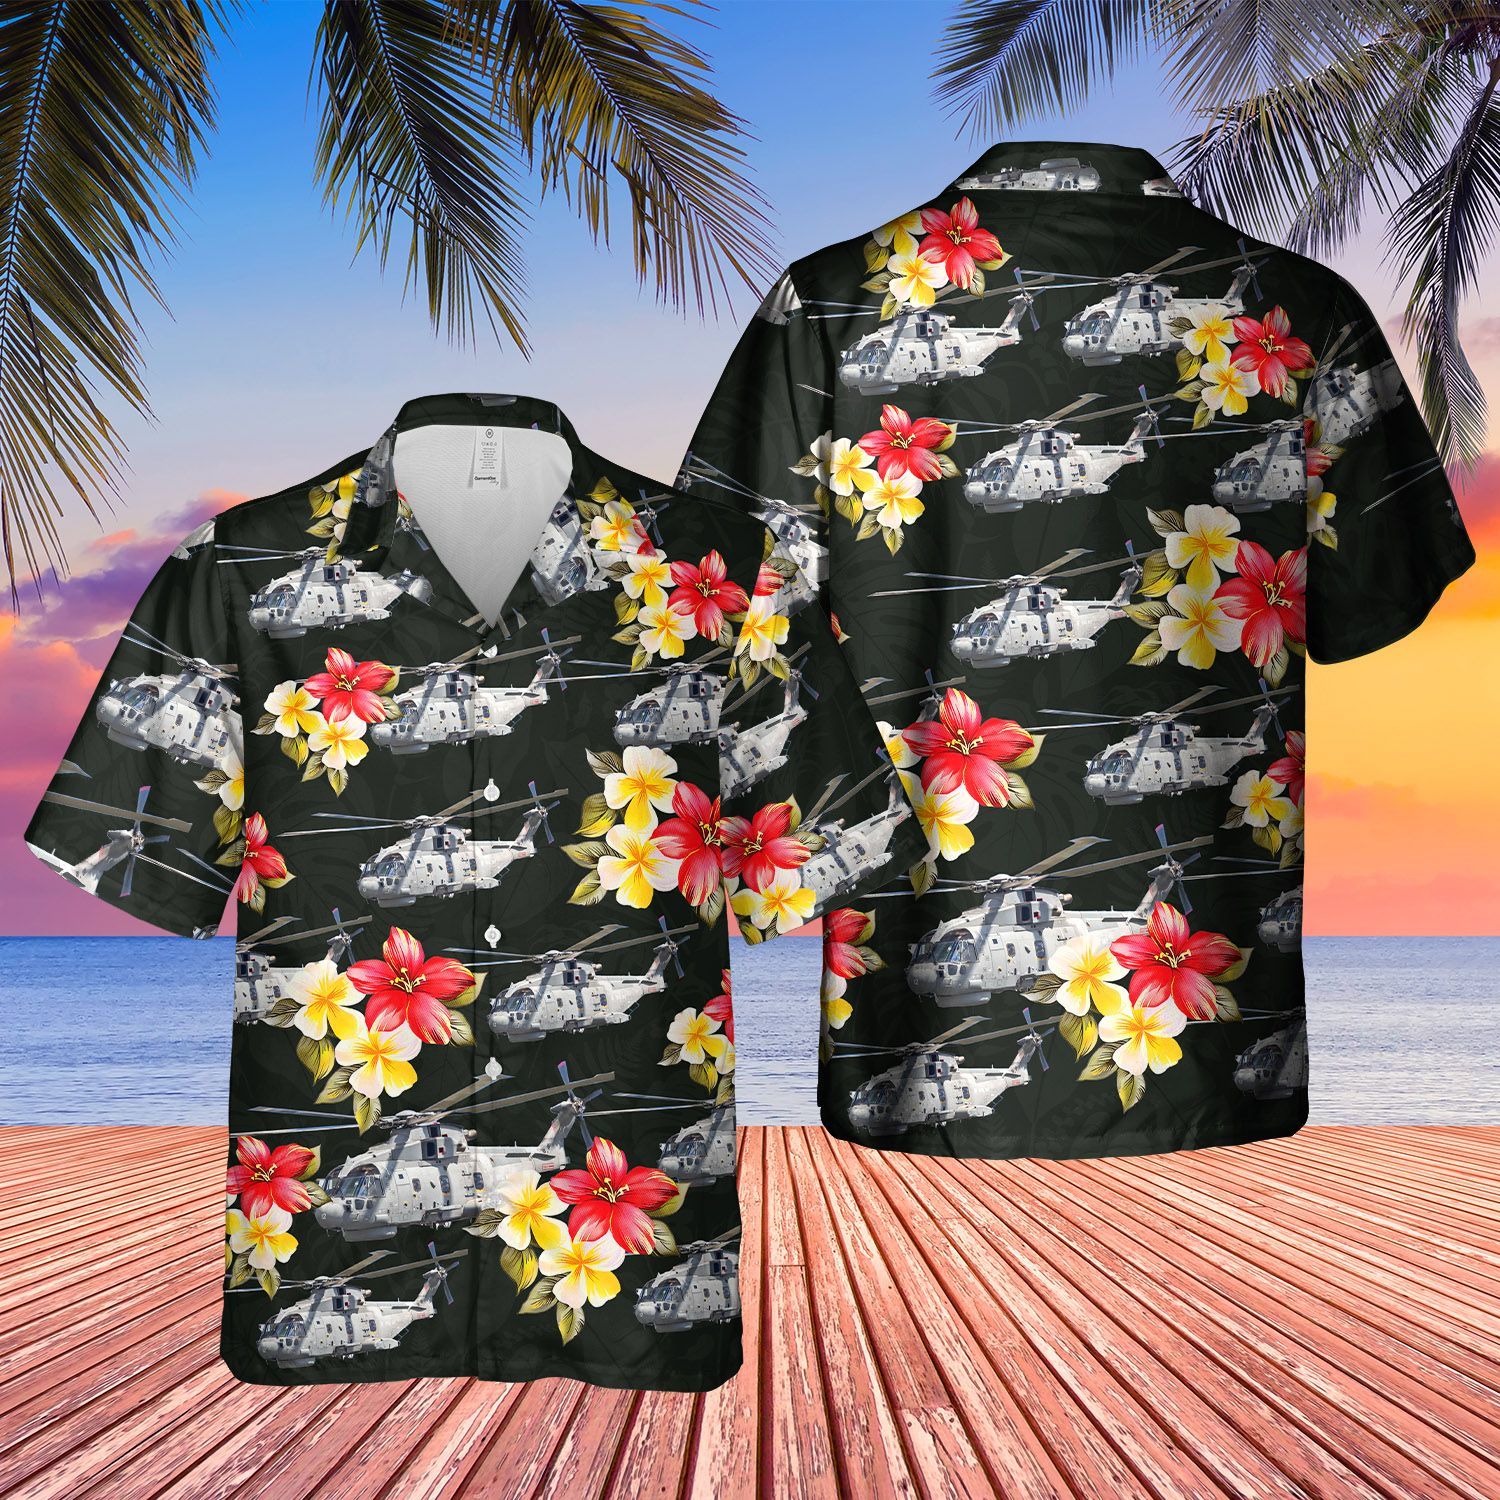 Enjoy your summer with top cool hawaiian shirt below 212